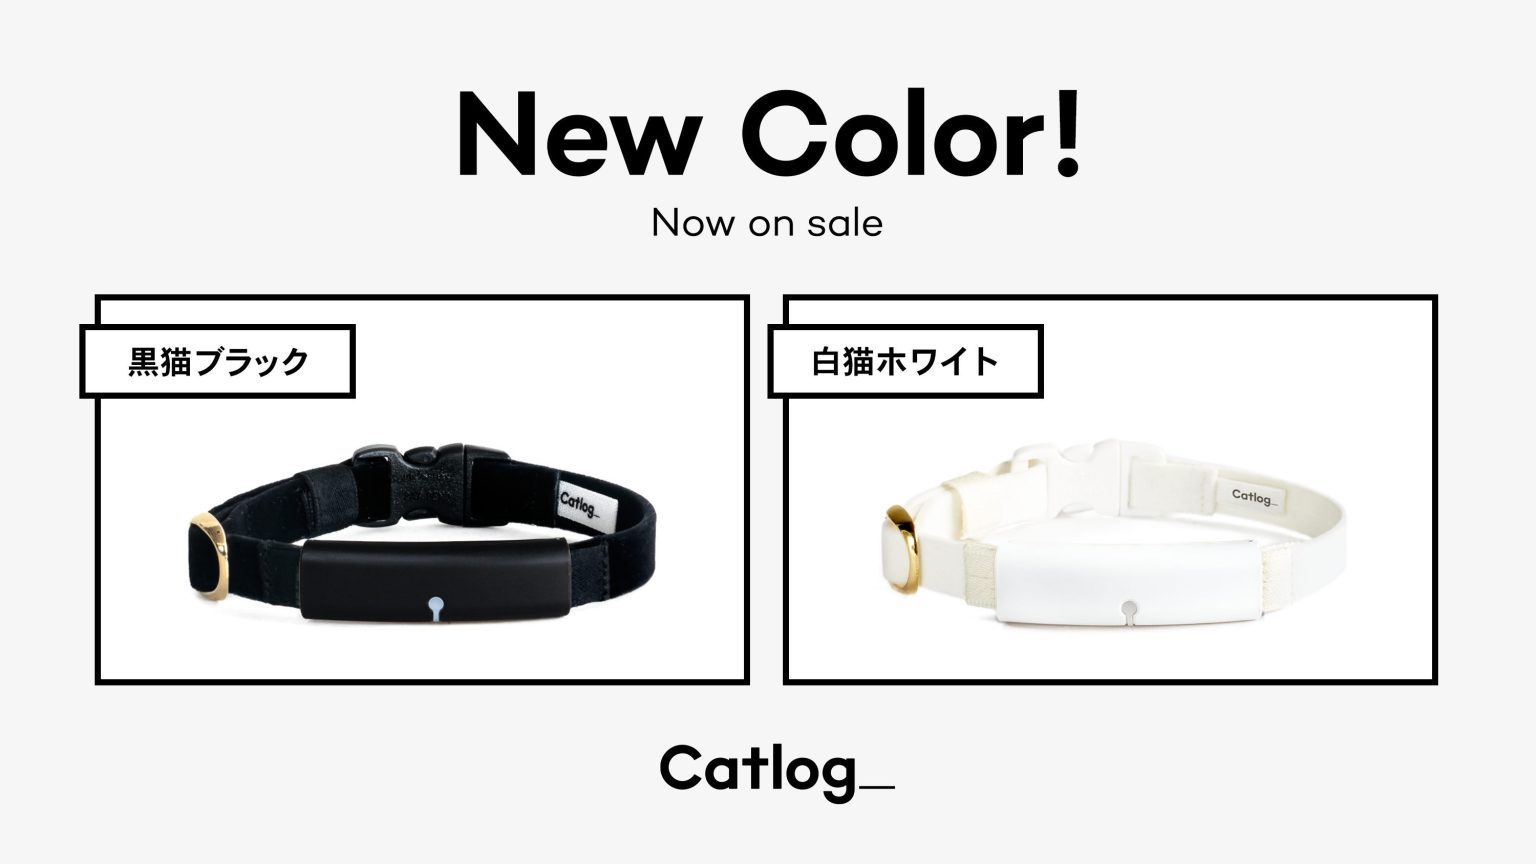 New Color! 黒猫ブラックと白猫ホワイト